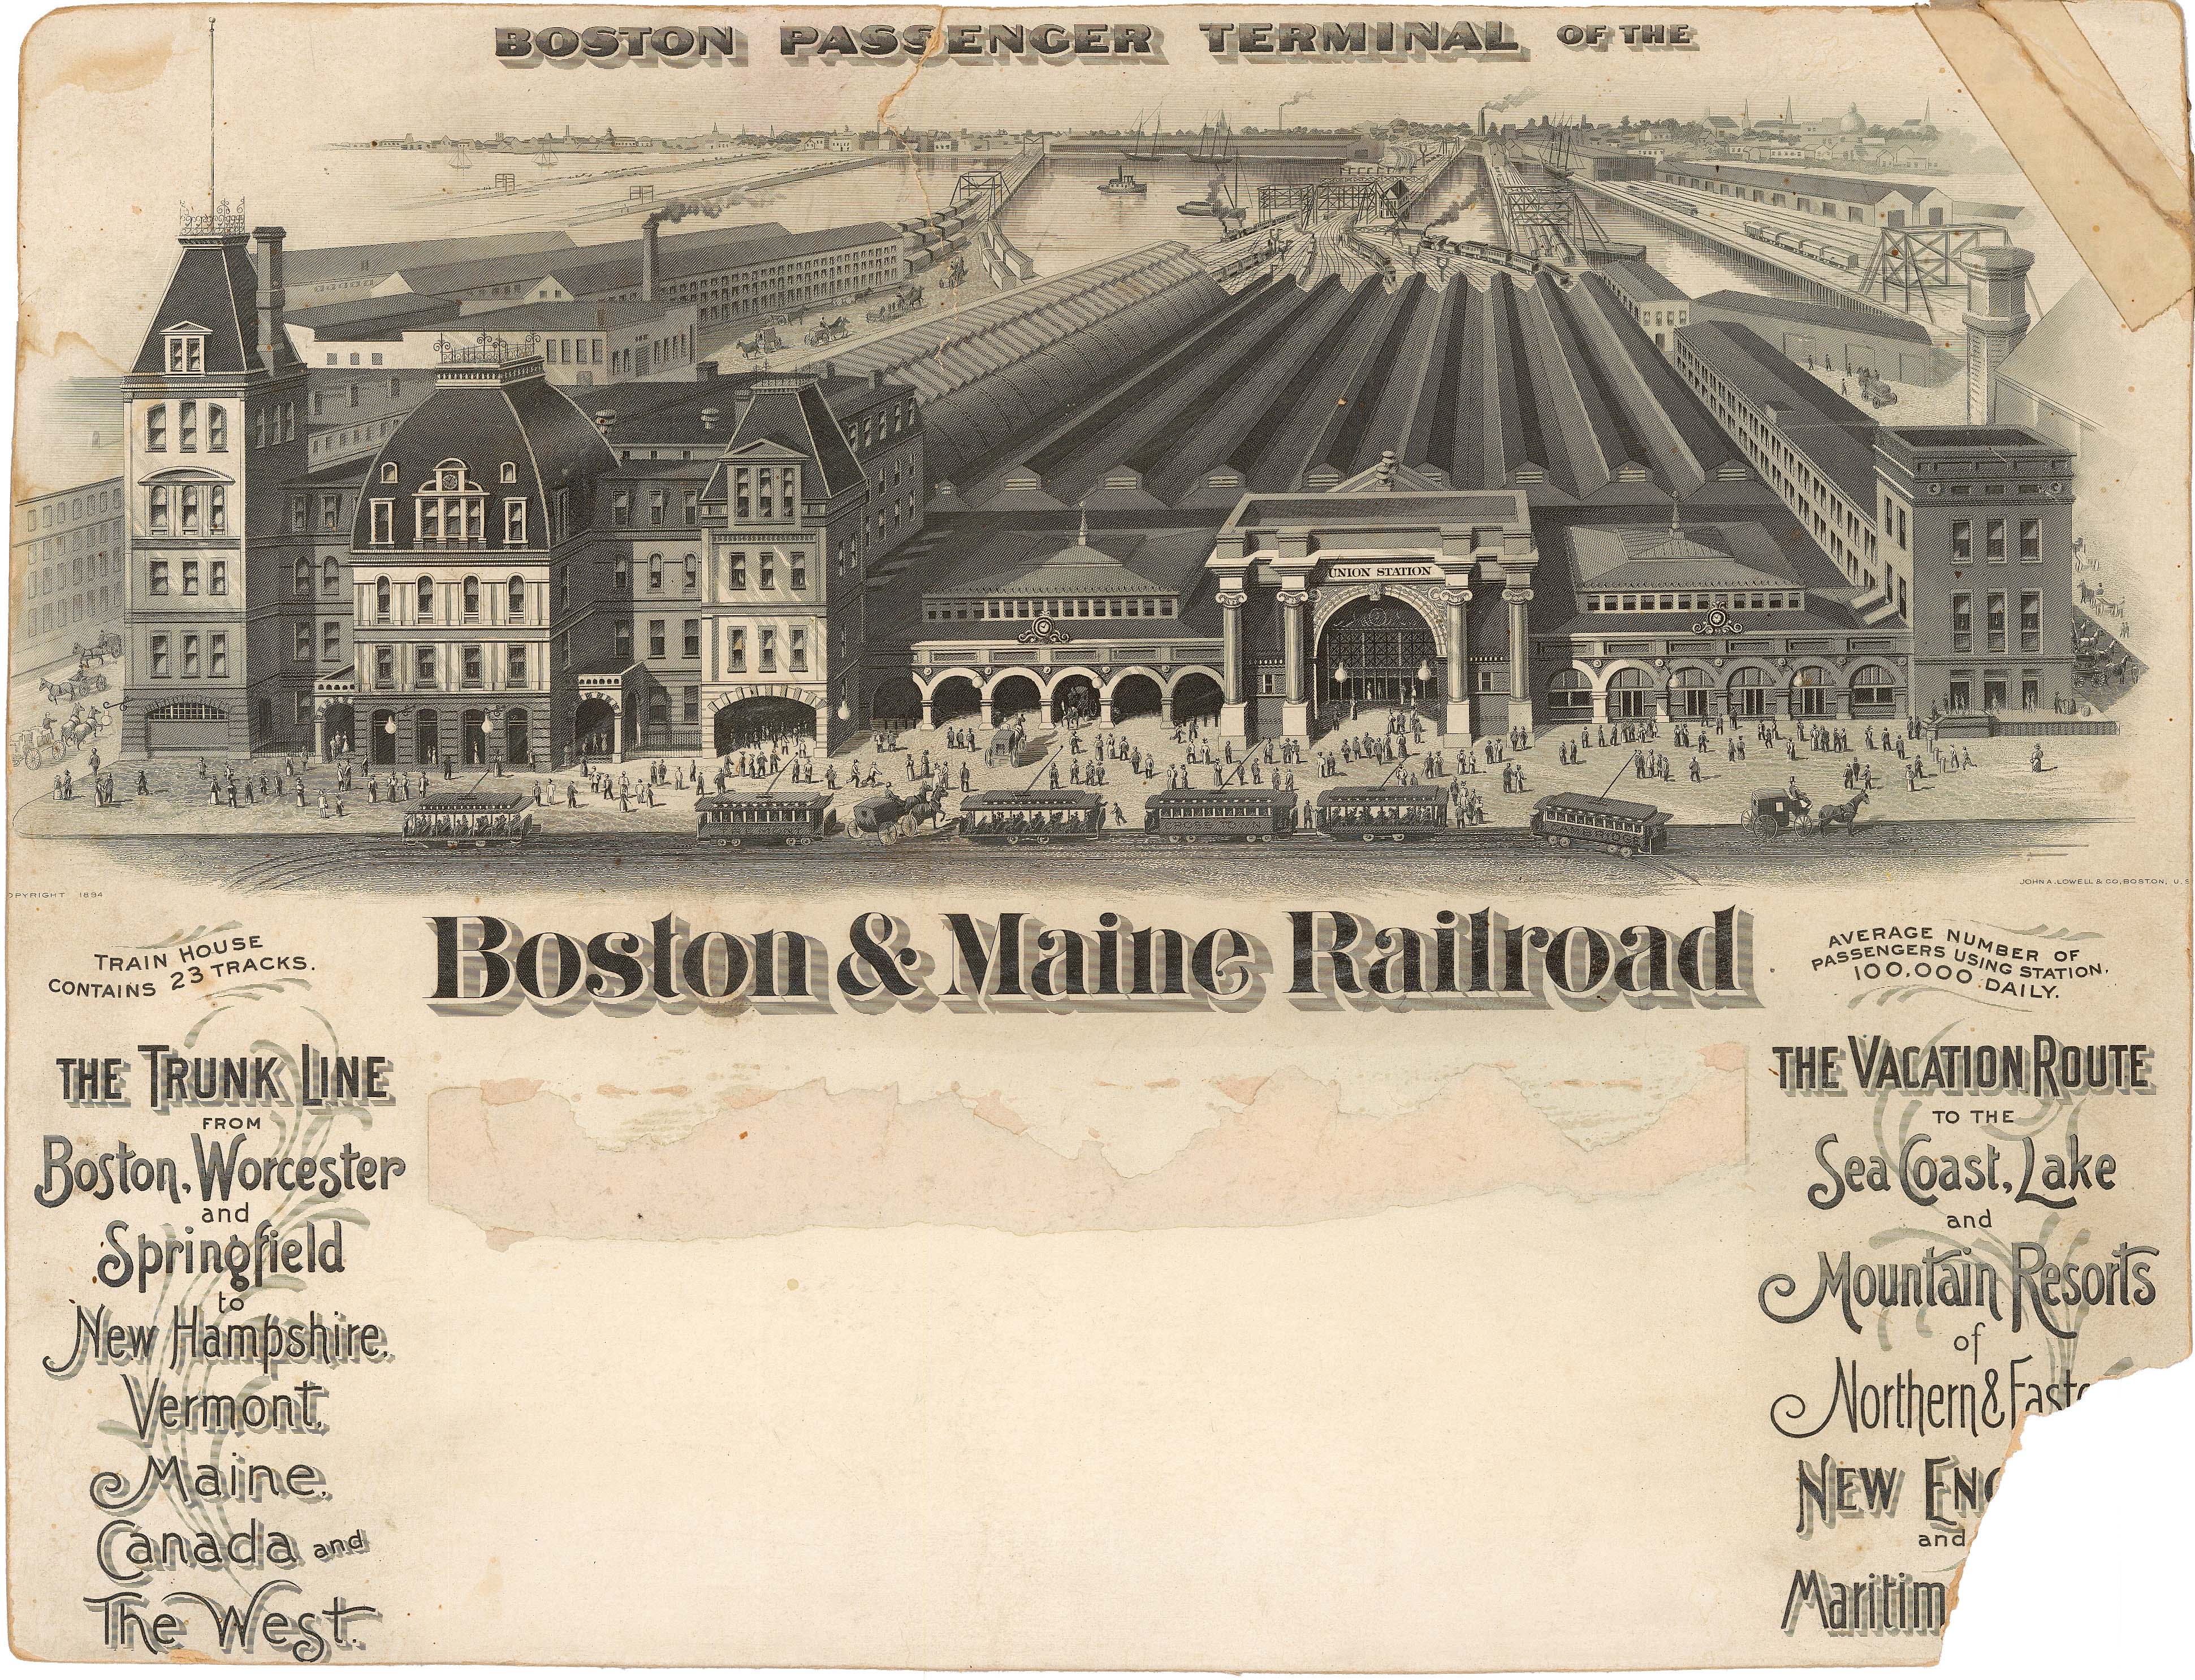 Image of Boston Passenger Terminal of the Boston & Maine Railroad